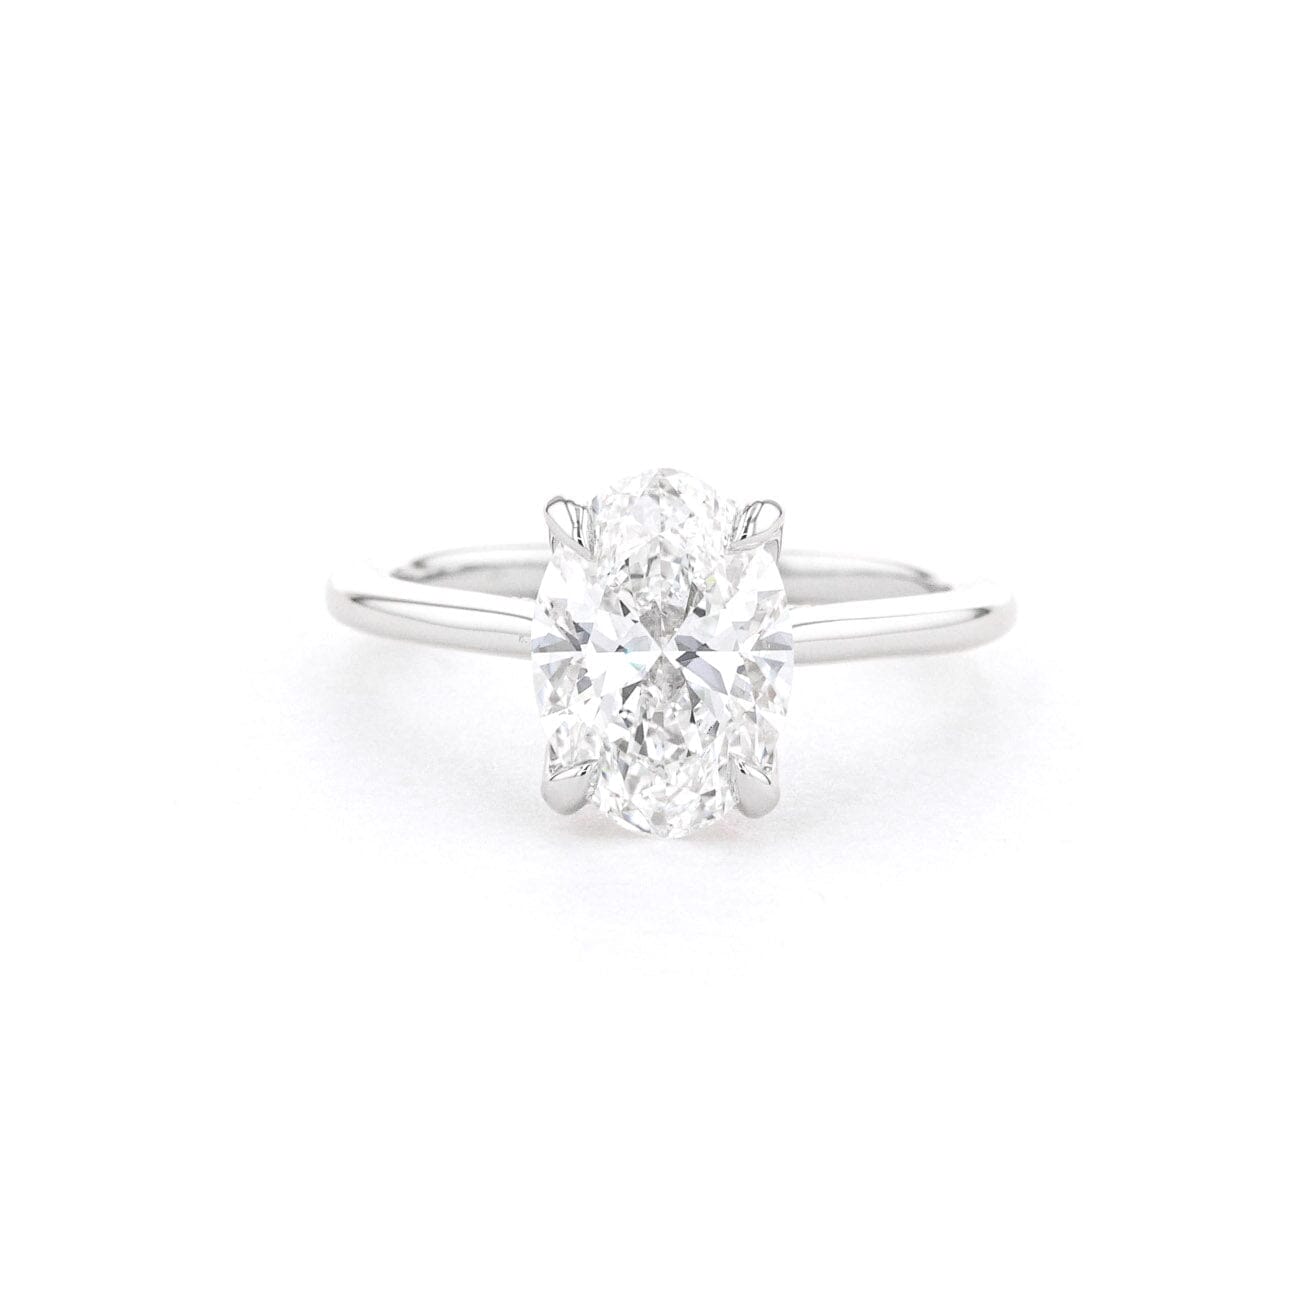 1.6mm Isabela Oval High Polish Engagement Rings Princess Bride Diamonds 